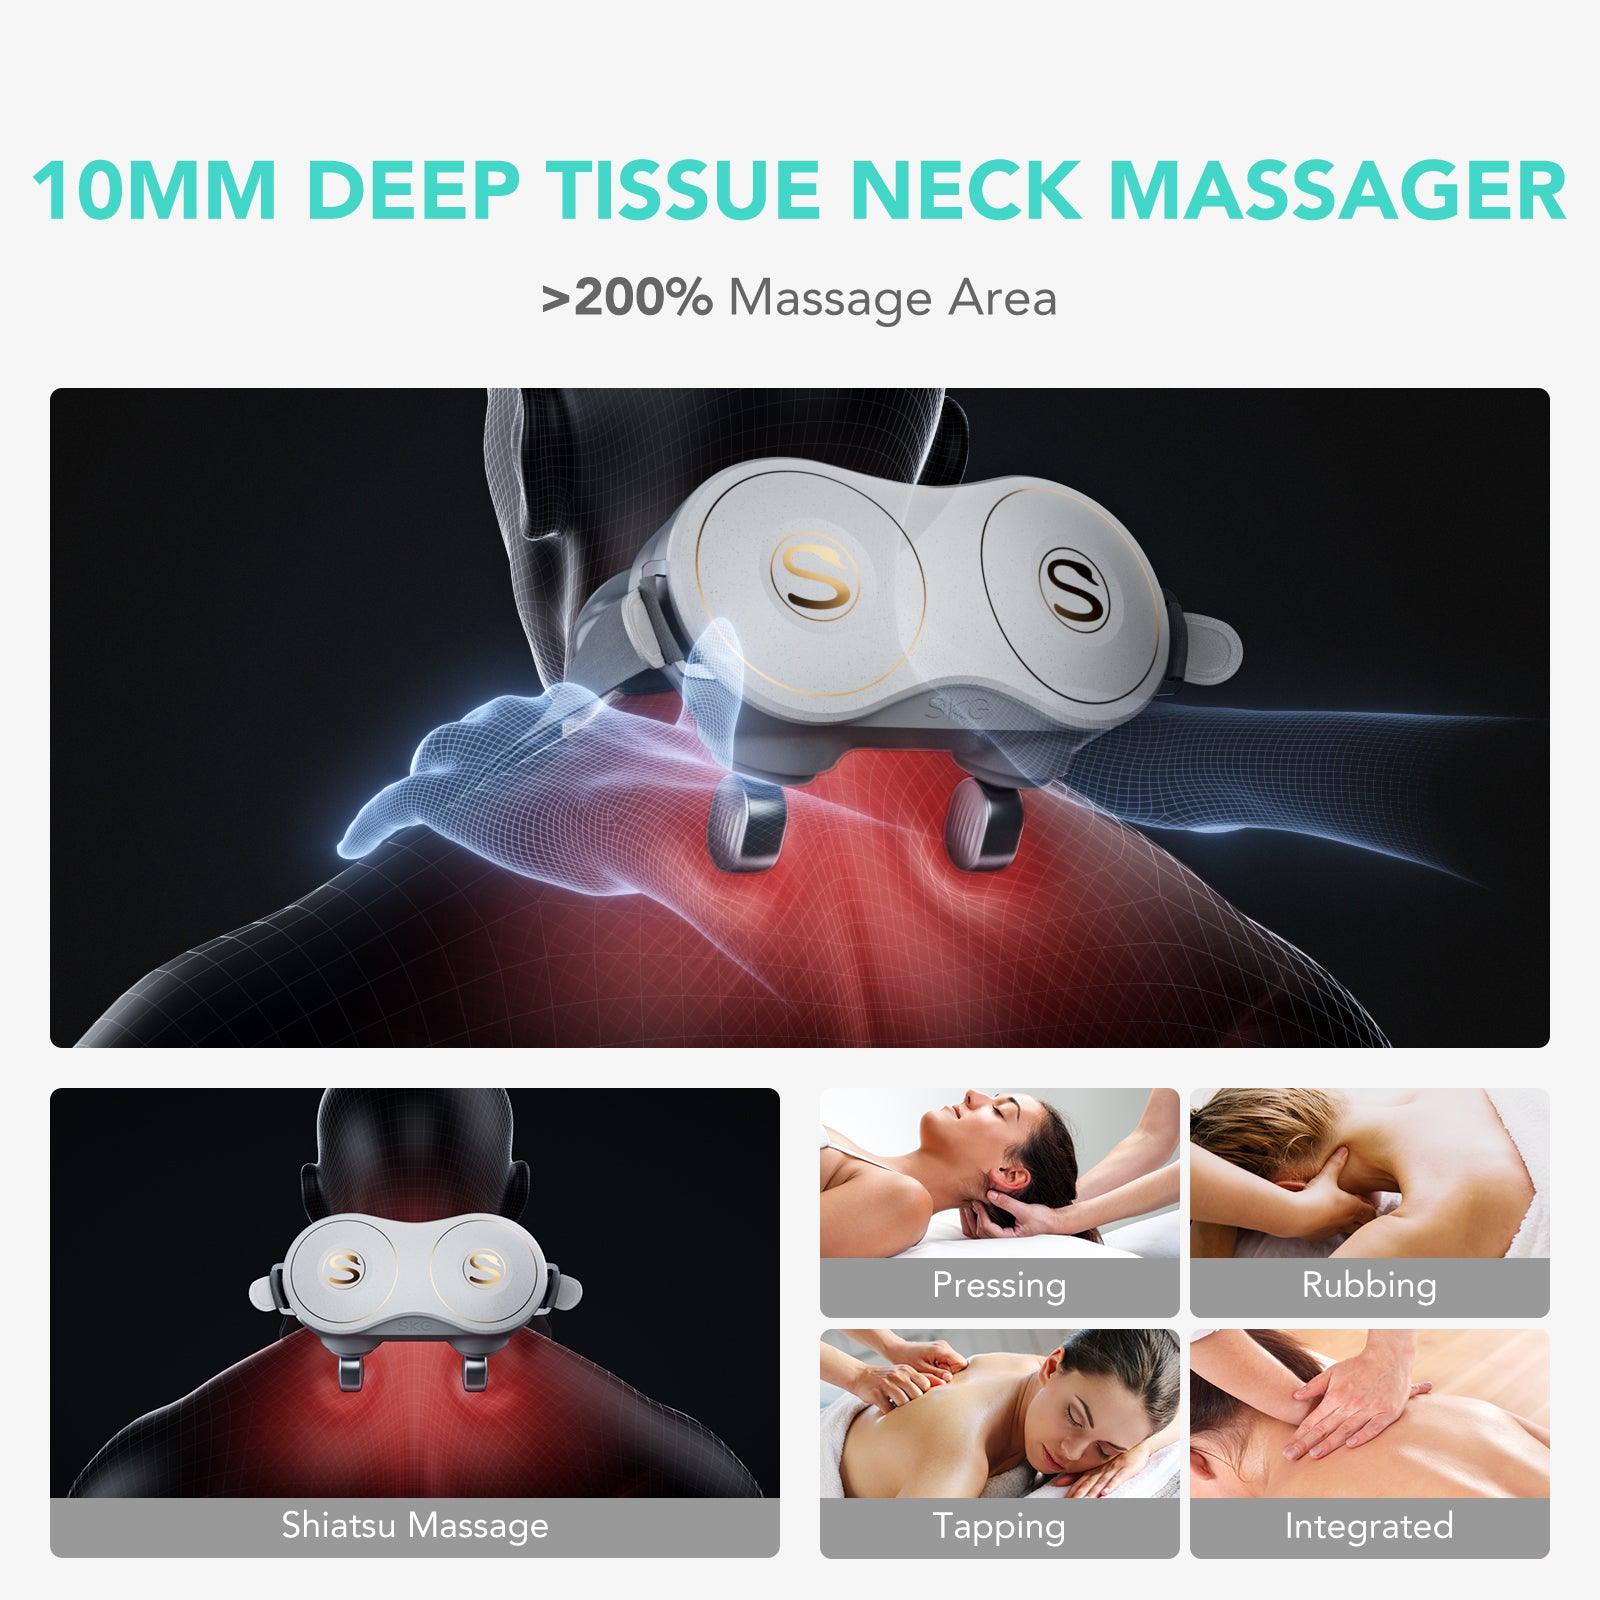 Neck Massagers in Massage 